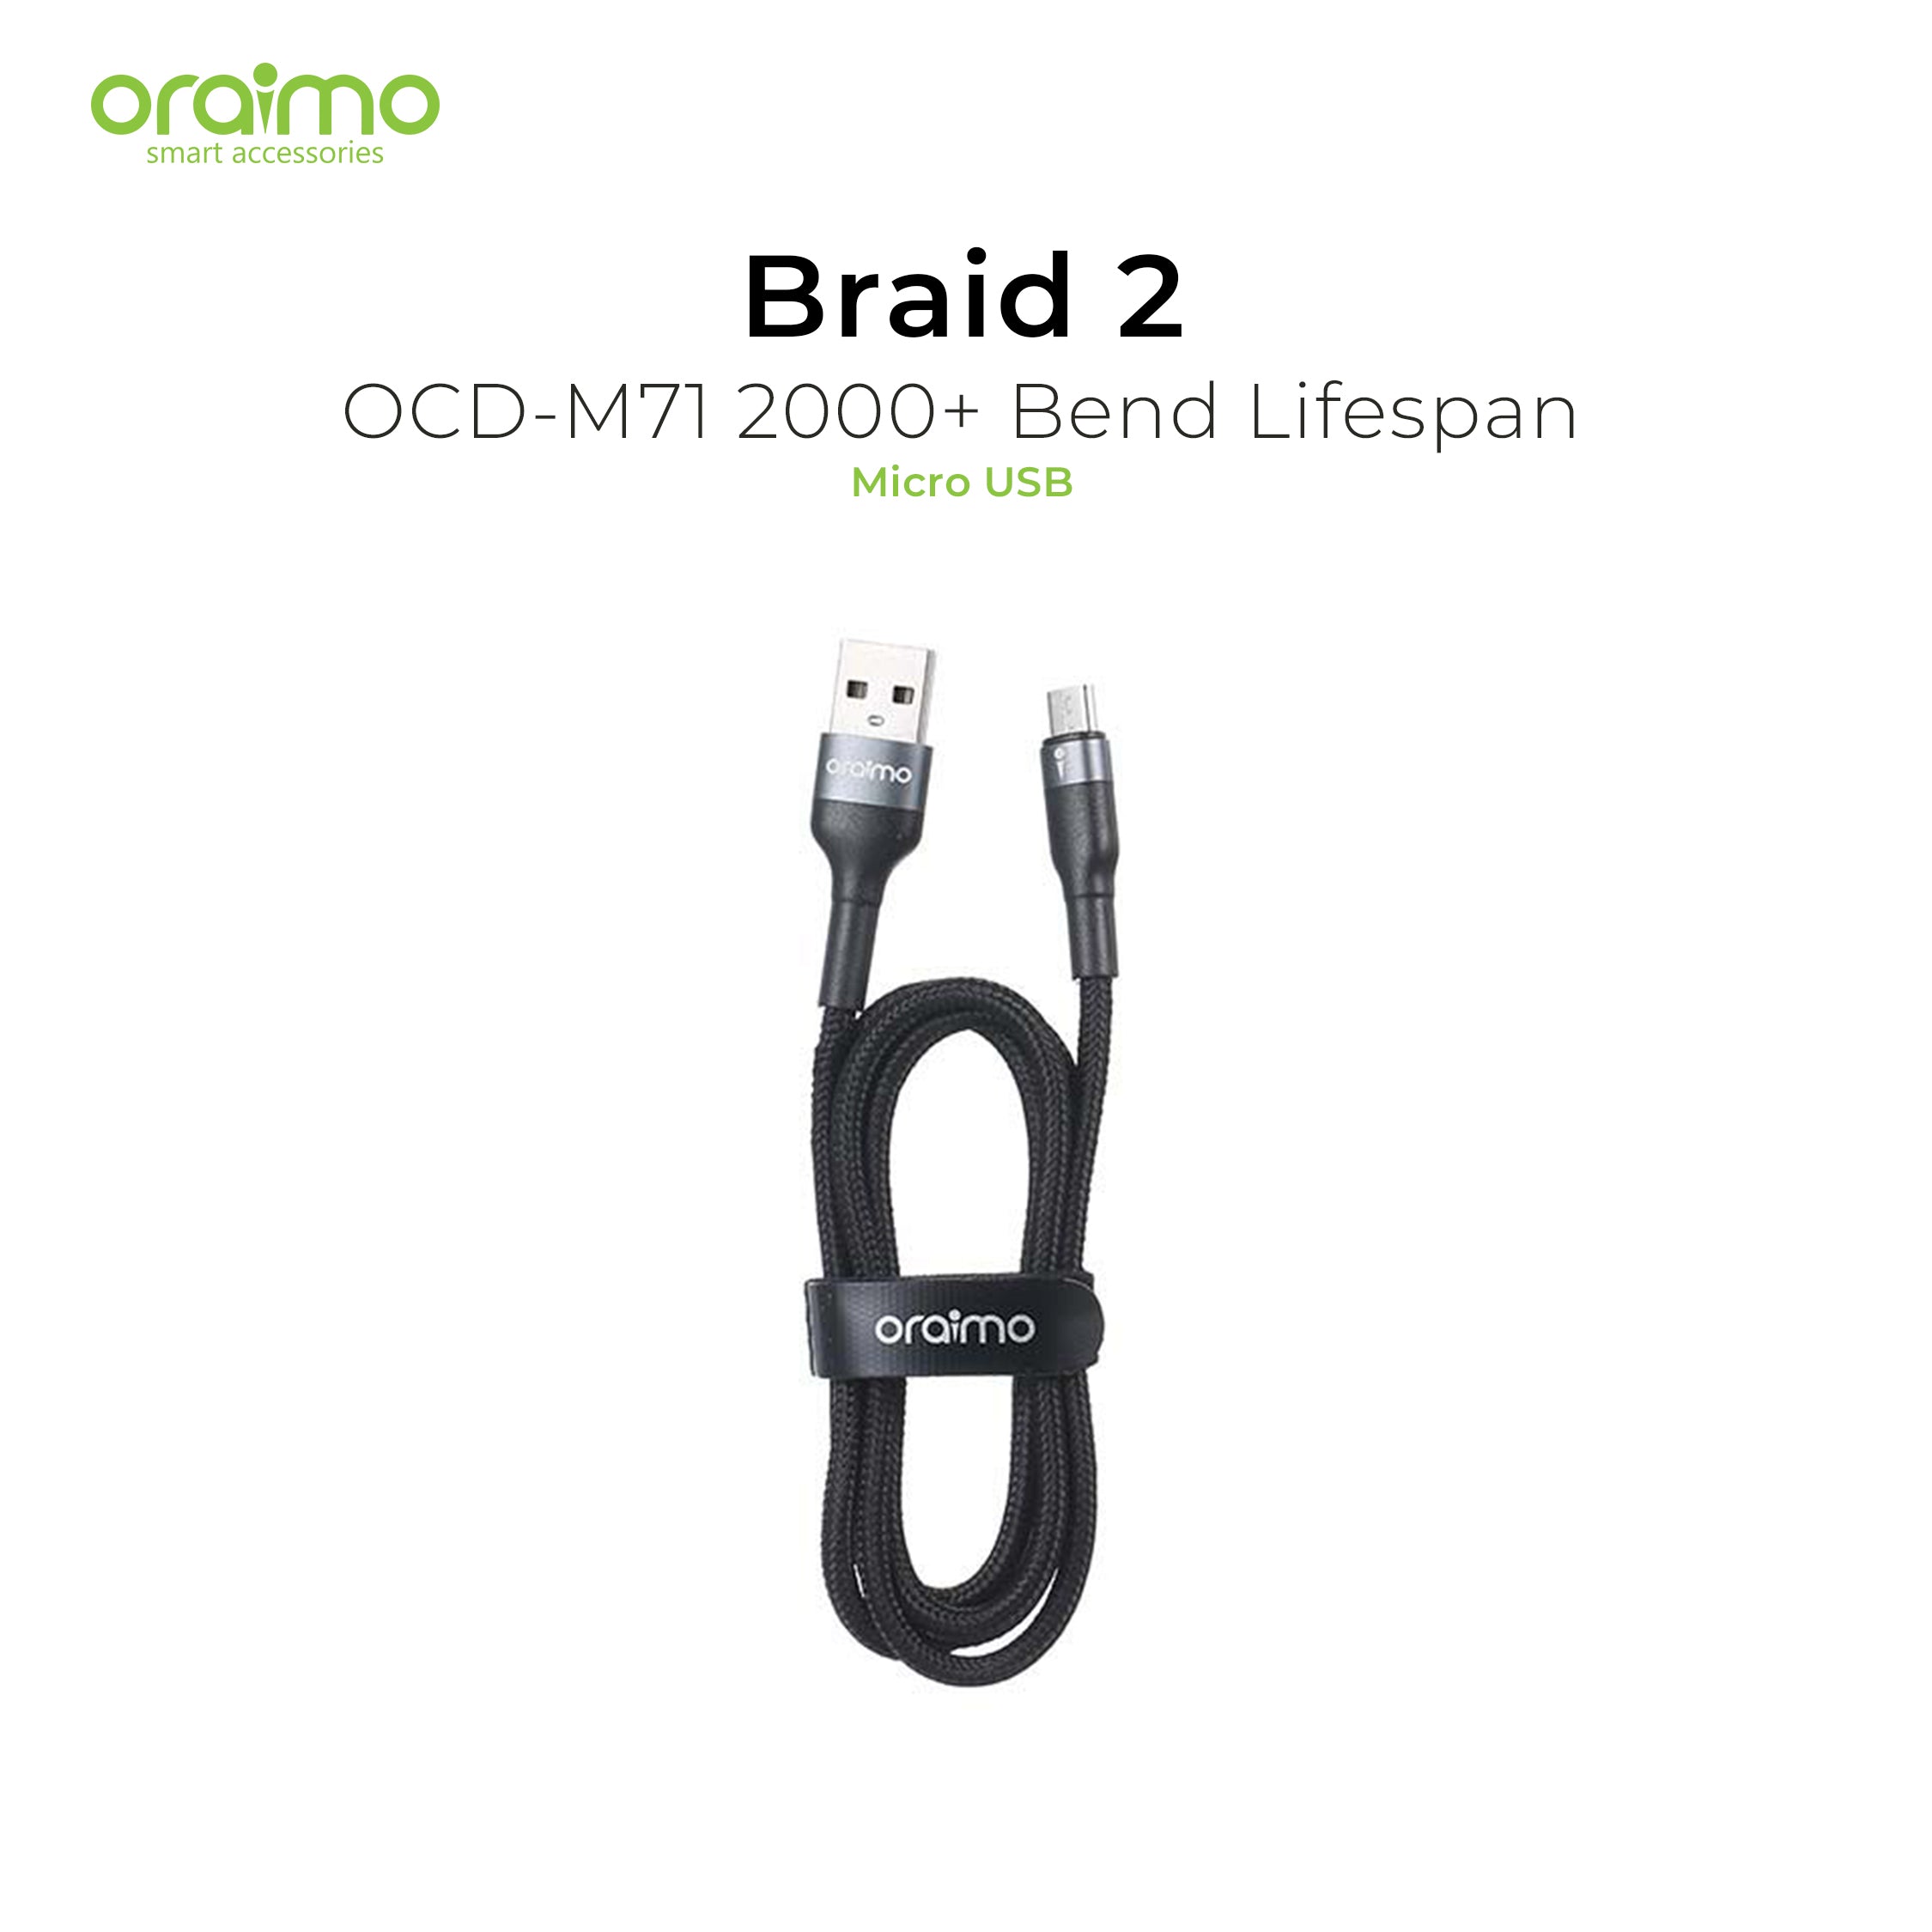 Oraimo Braid2 Micro USB Cable OCD-M71